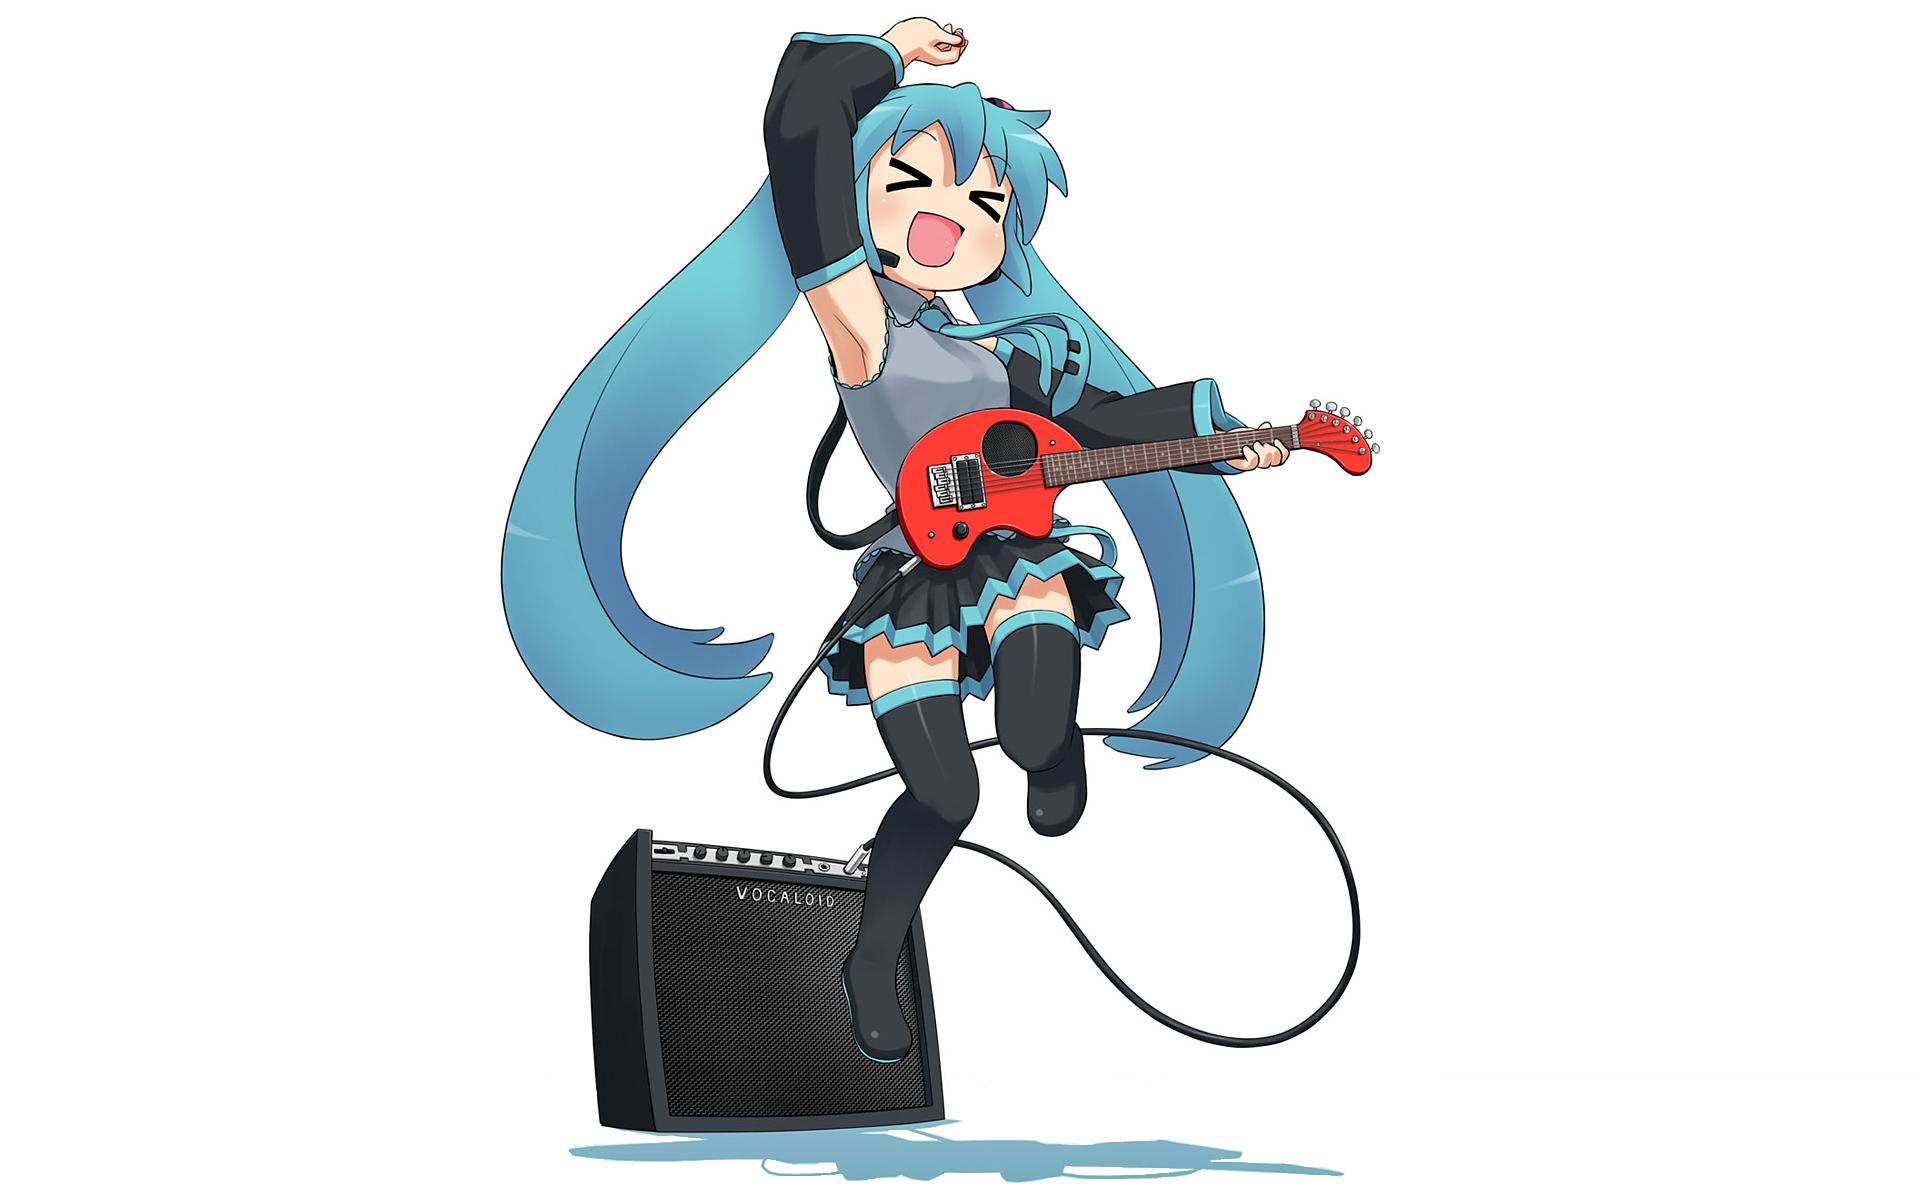 Hatsune Miku playing guitar.